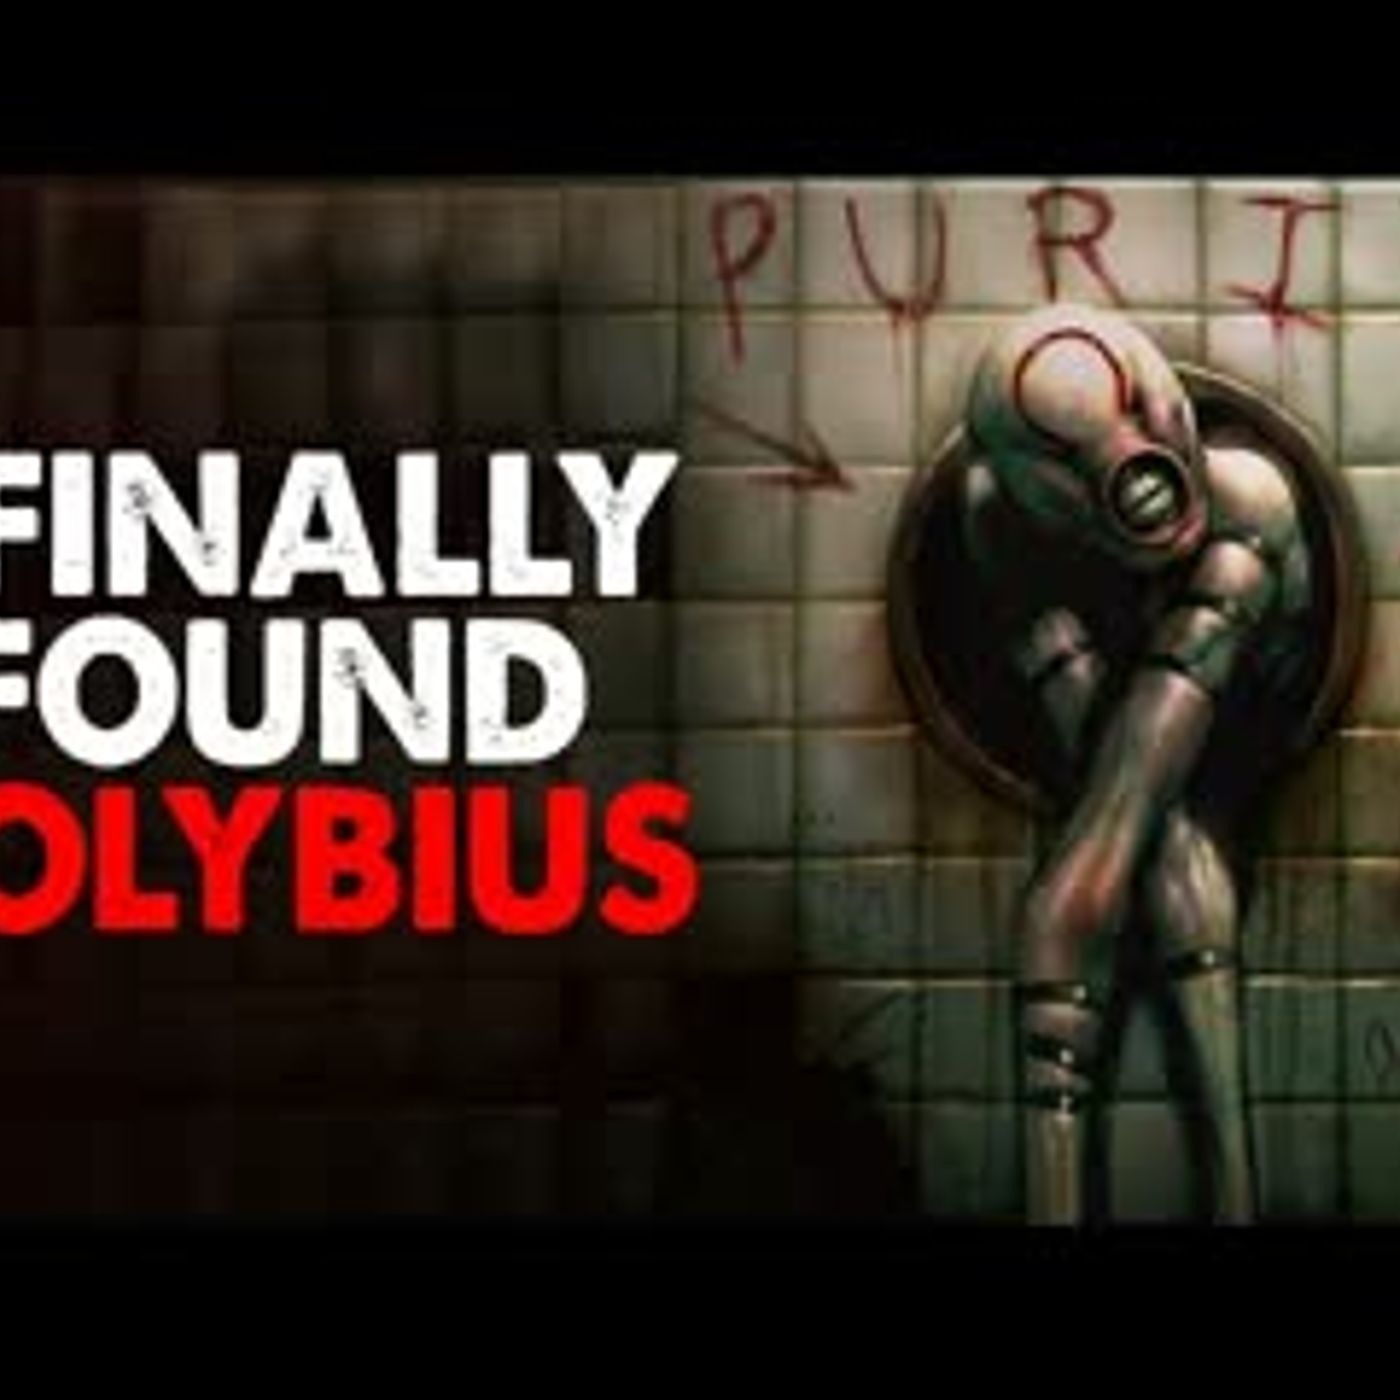 ”I found the accursed videogame ’Polybius’” Creepypasta